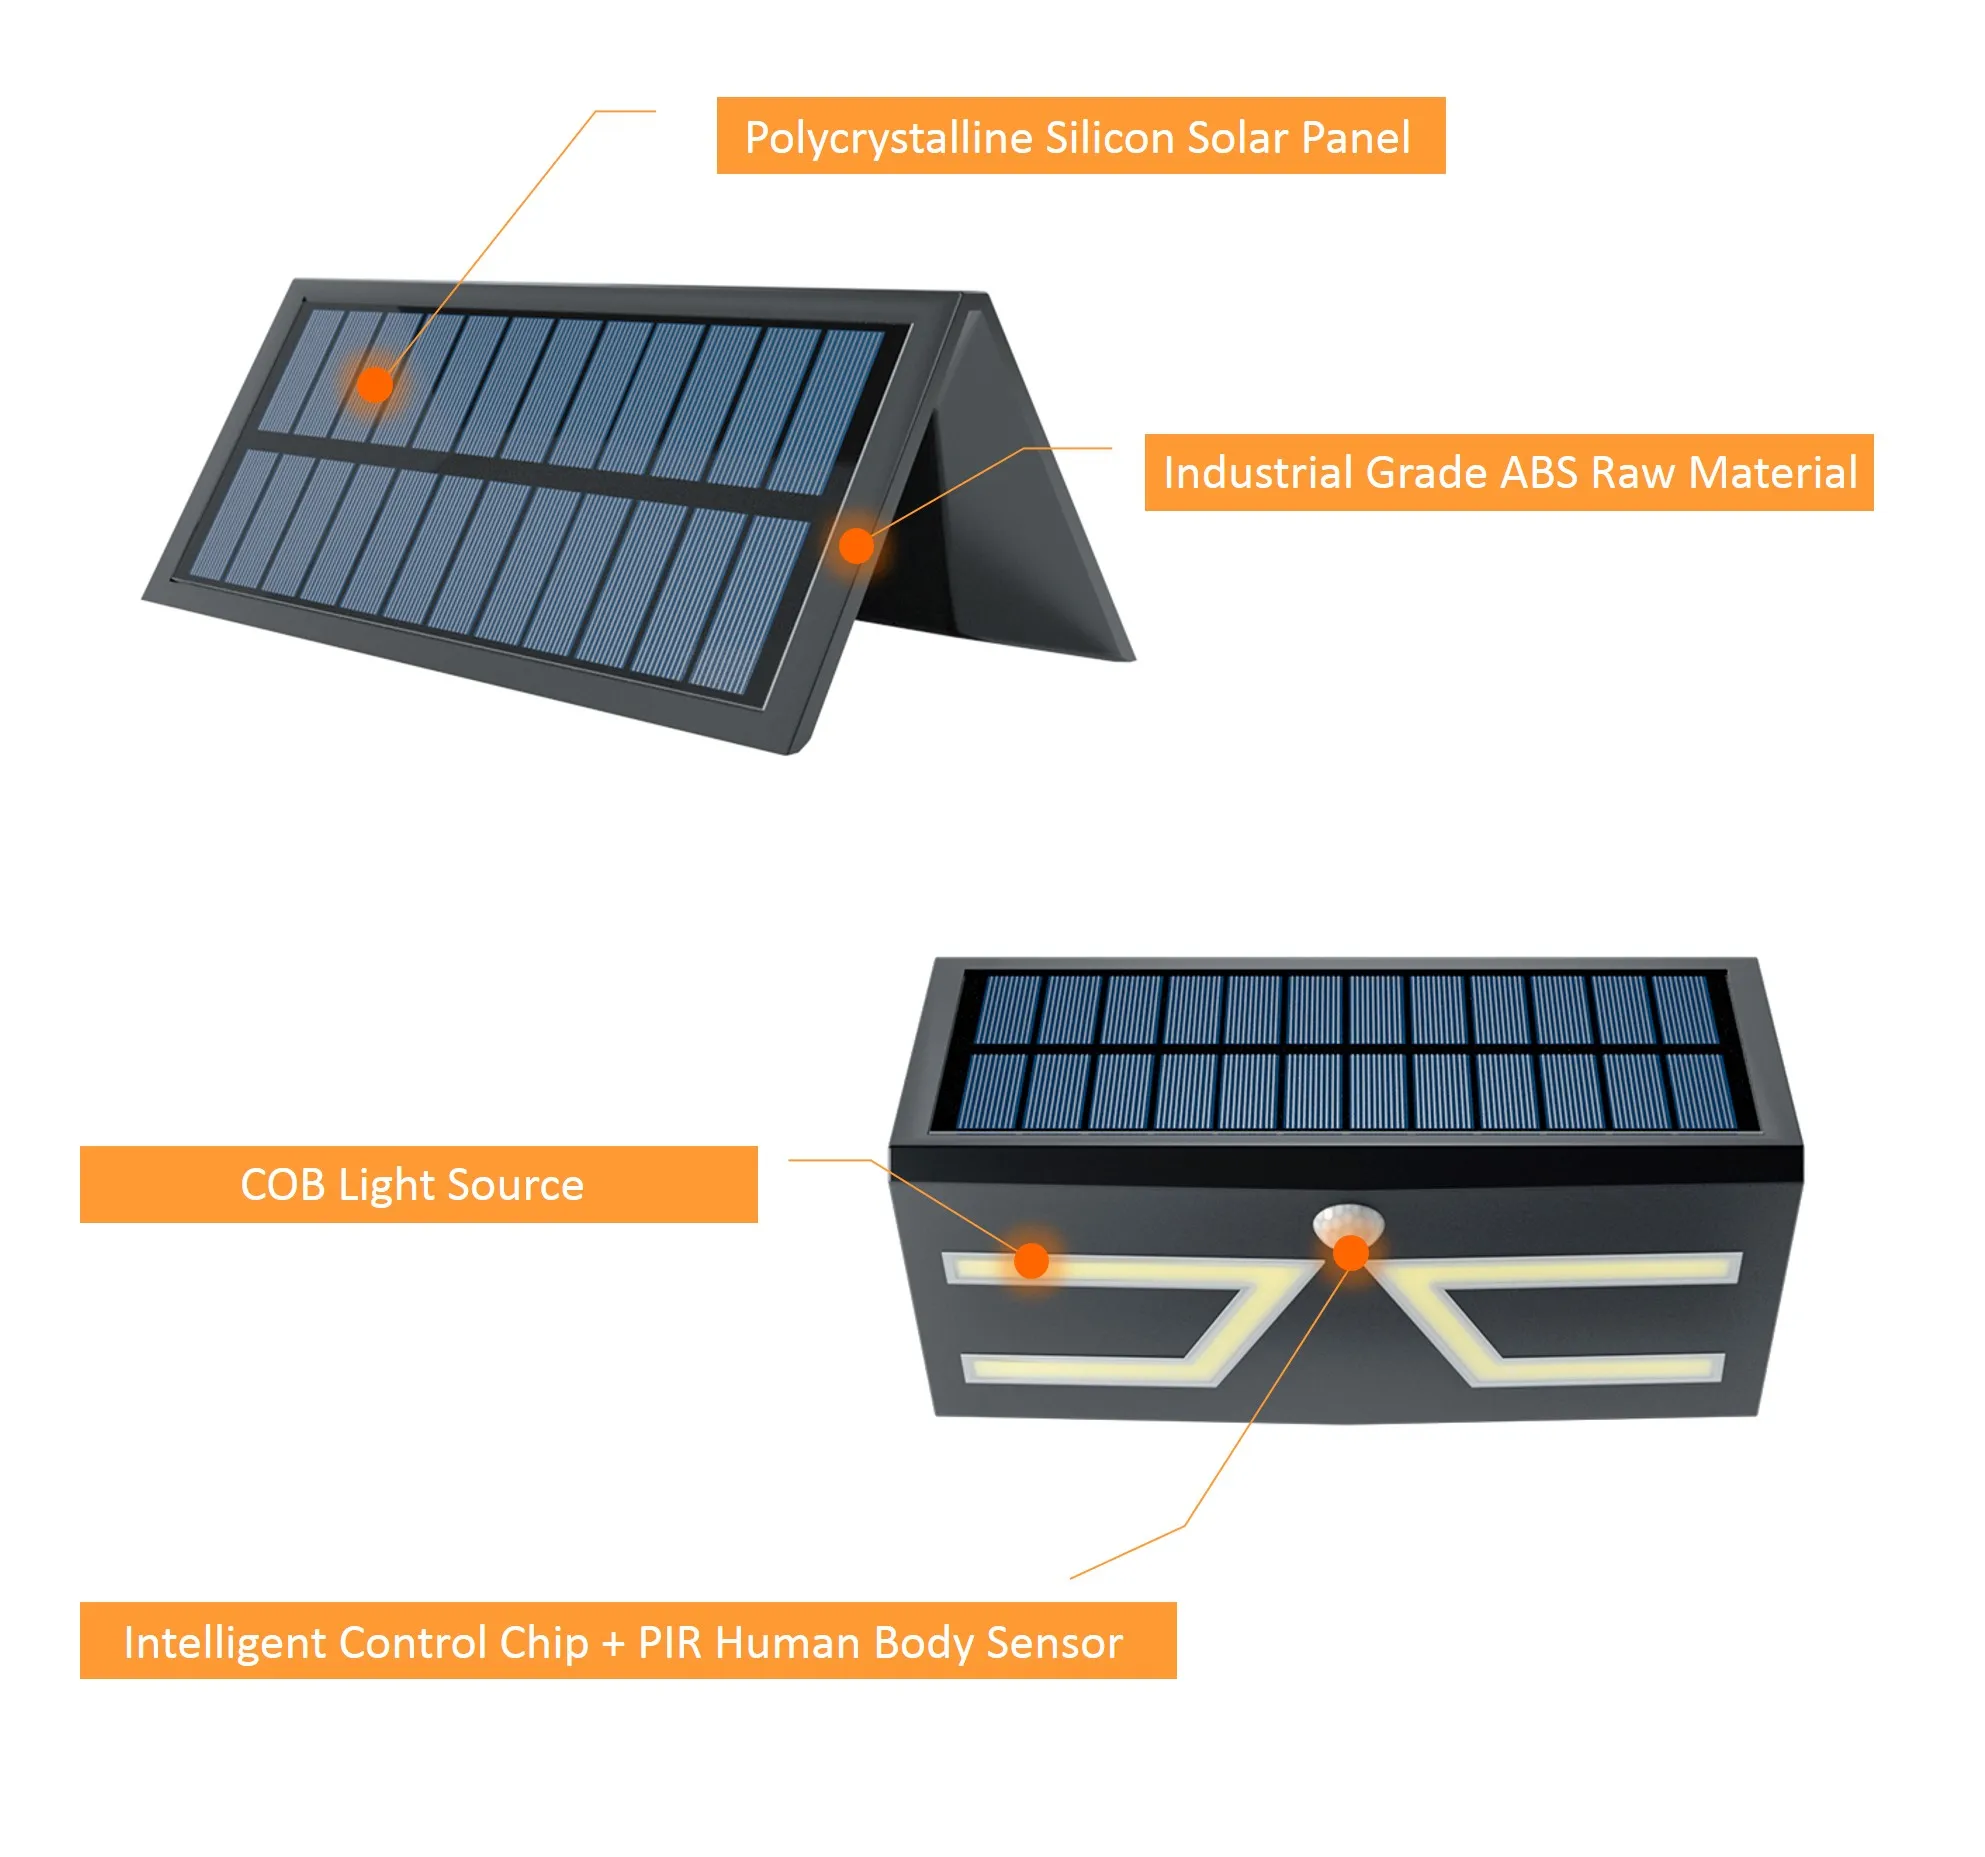 Multifunctional Energy Saving Side Wall Solar Lights Outdoor